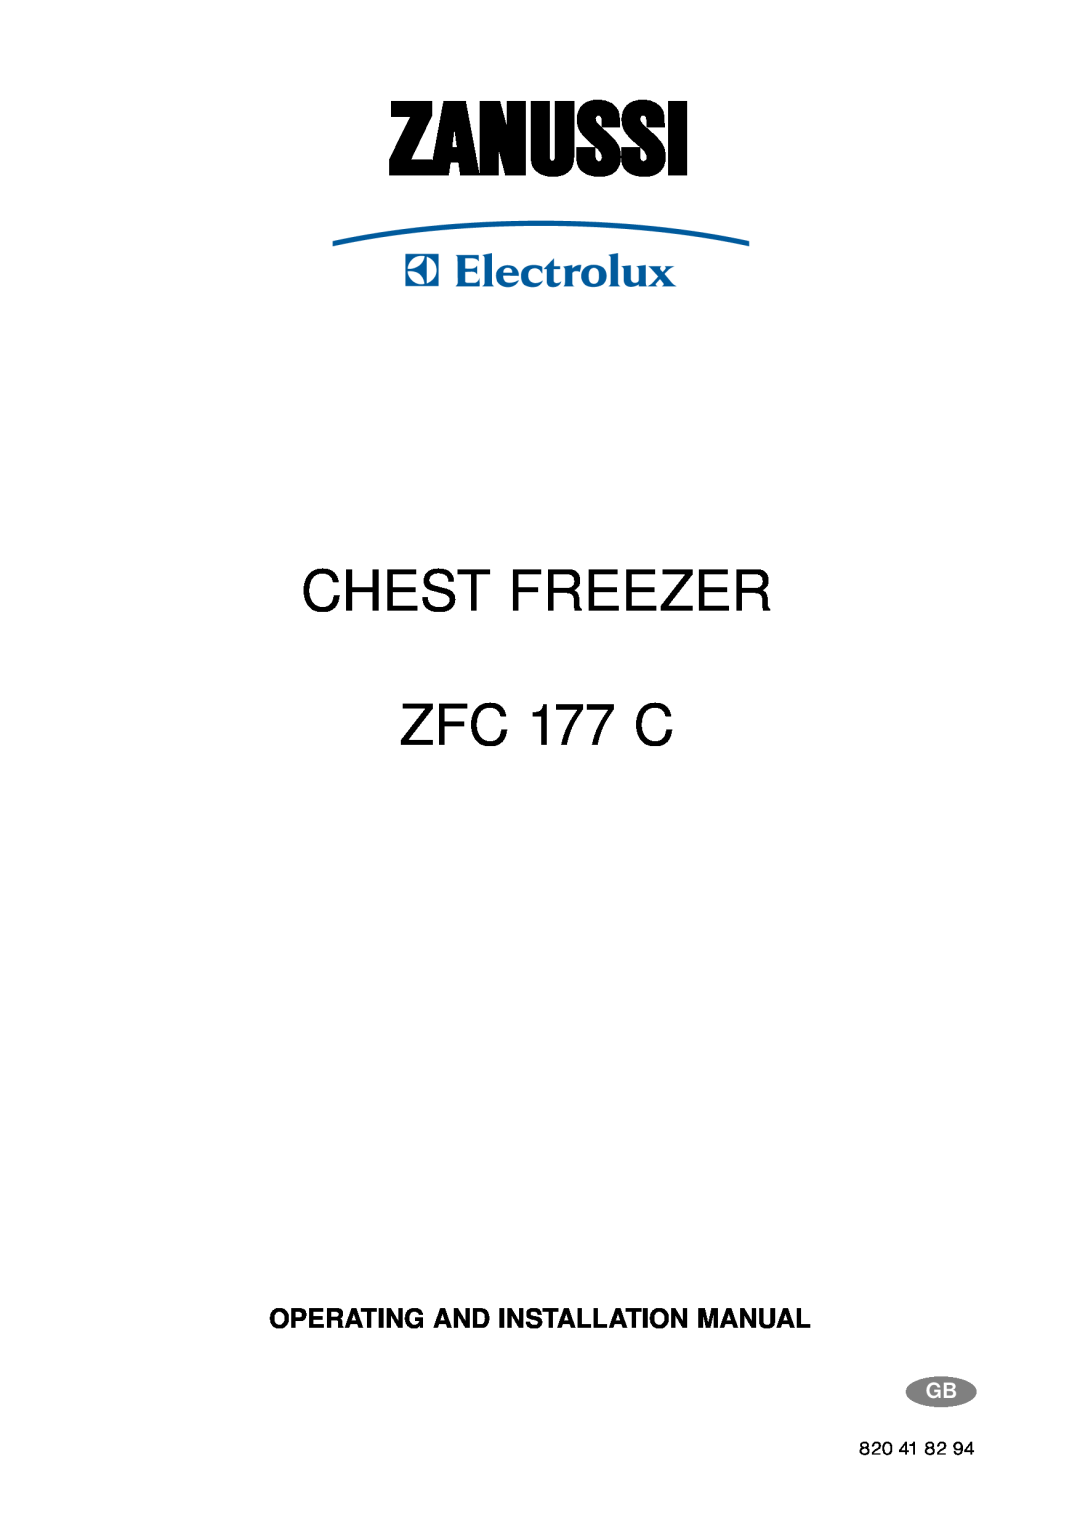 Zanussi installation manual Zanussi, CHEST FREEZER ZFC 177 C, Operating And Installation Manual 